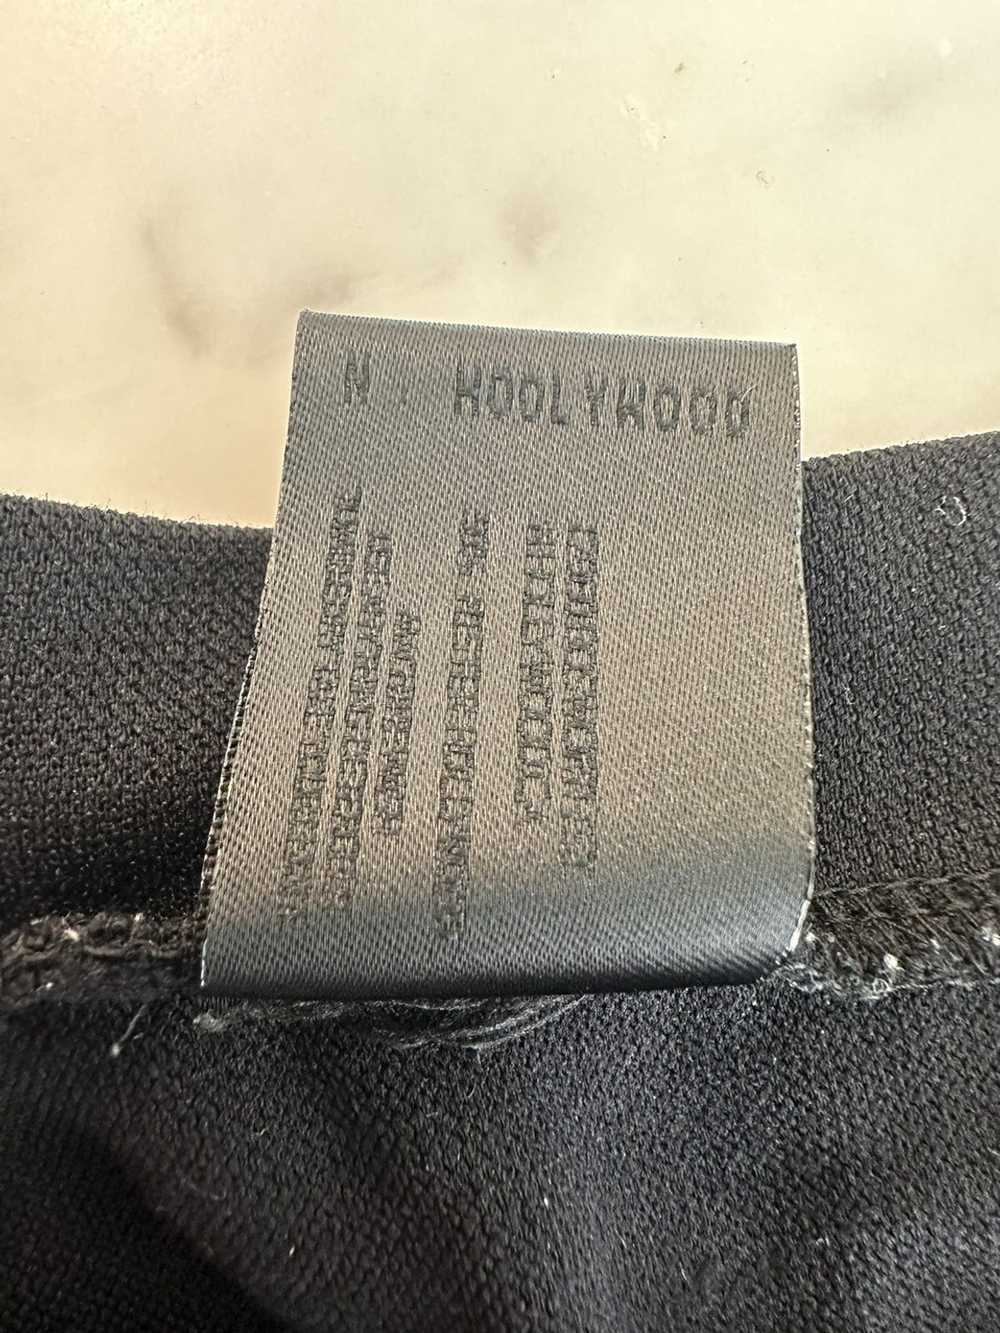 N. Hoolywood N Hollywood Black Sweatshirt - image 3